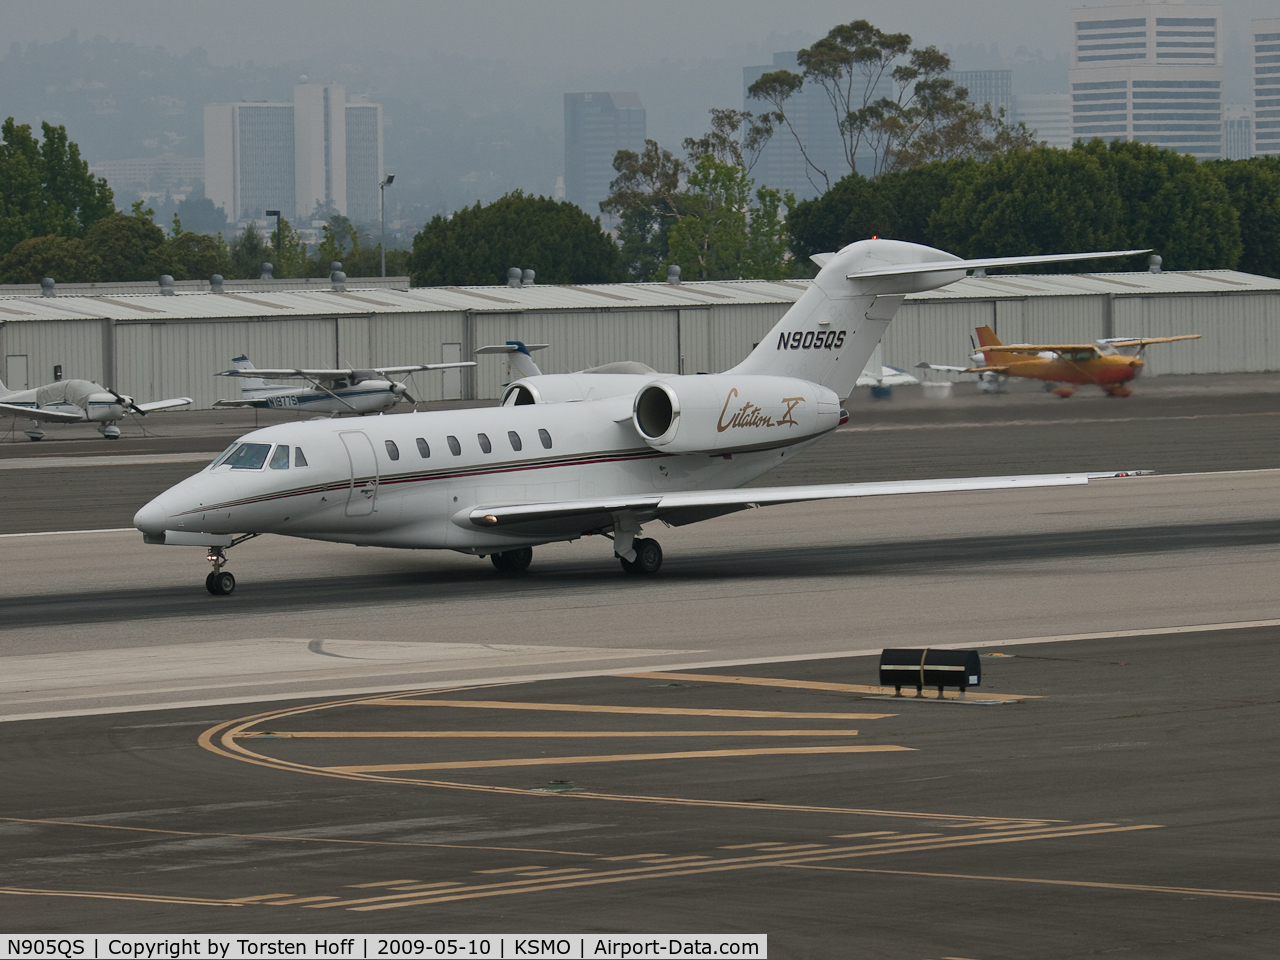 N905QS, 2000 Cessna 750 Citation X C/N 750-0105, N905QS departing from RWY 21